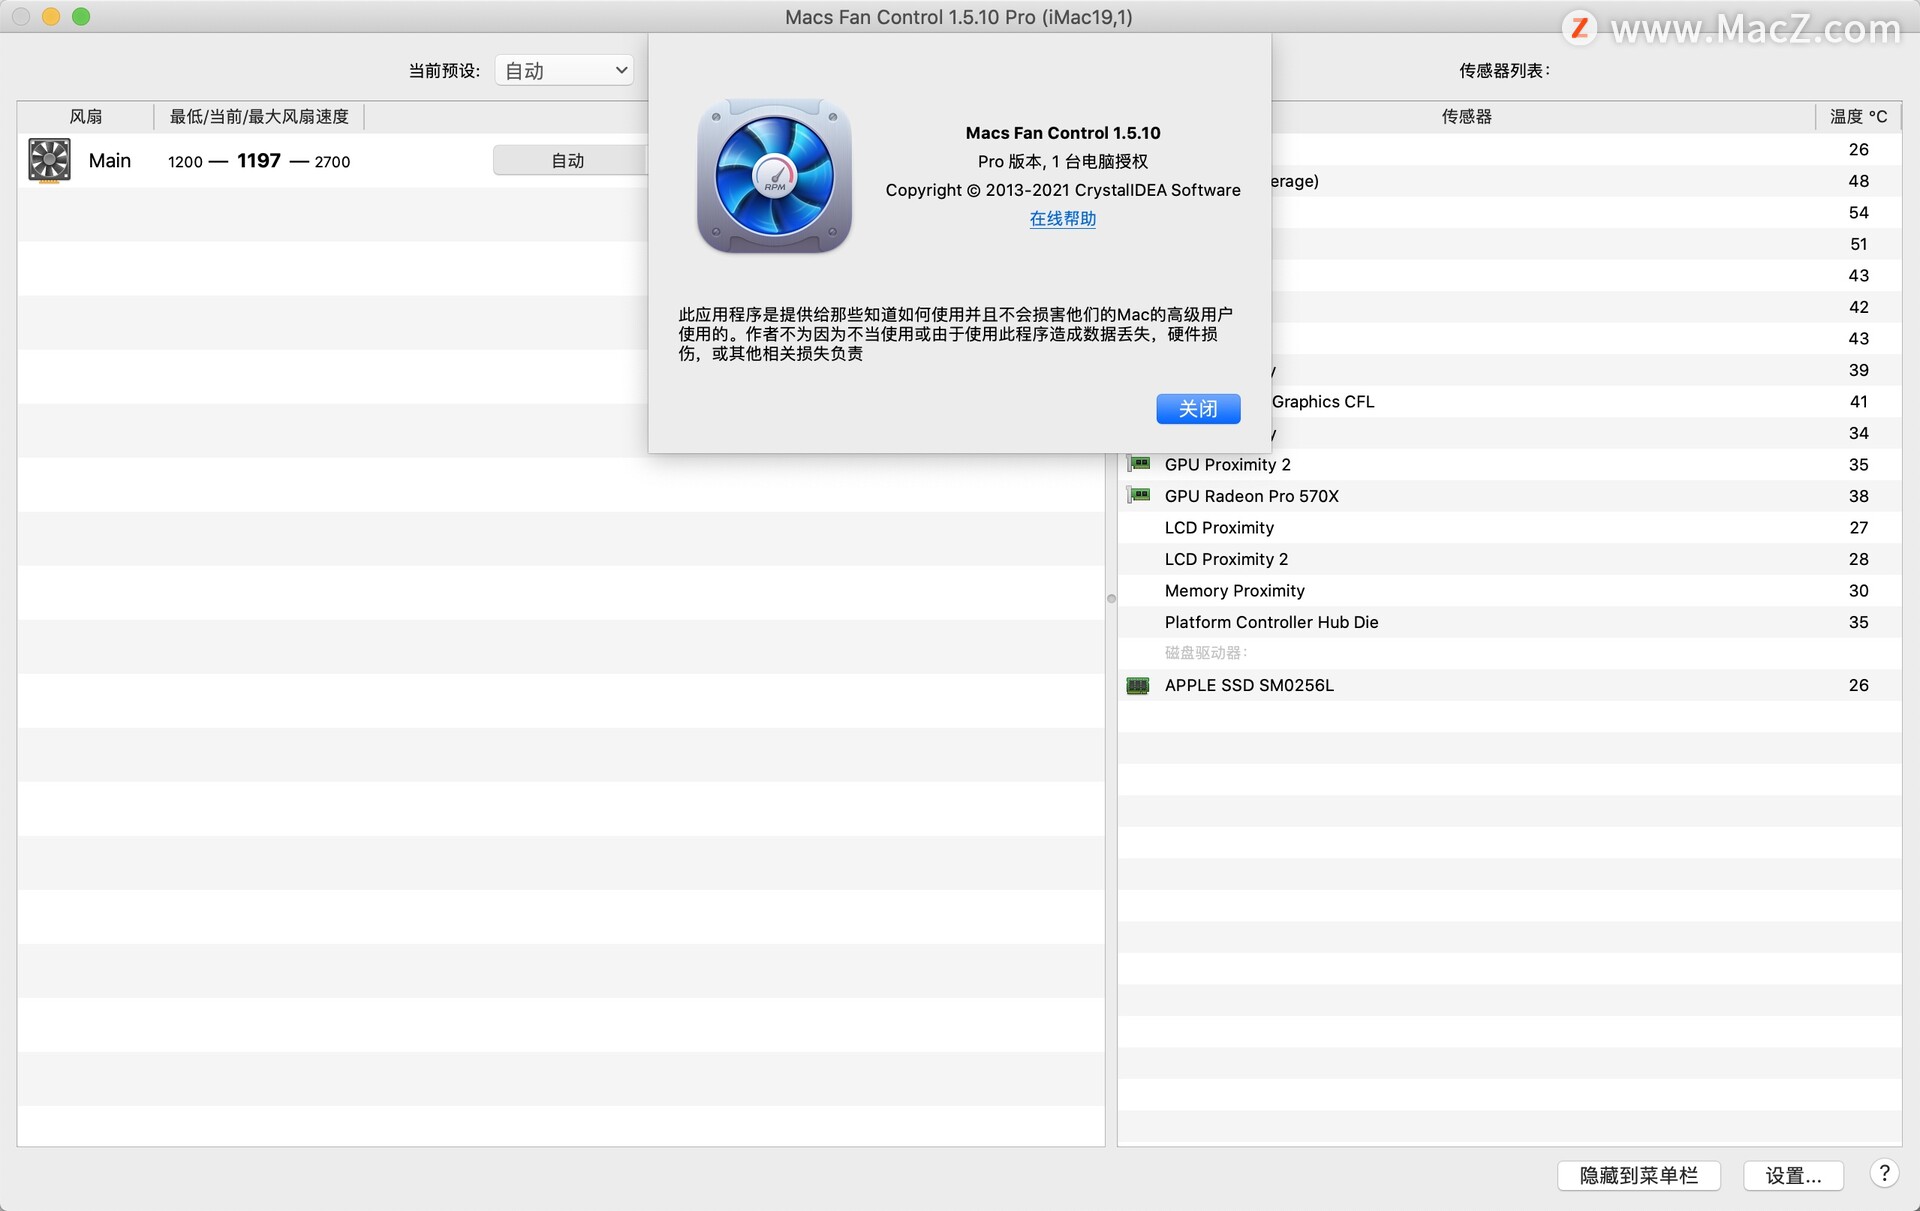 download the last version for mac FanControl v164